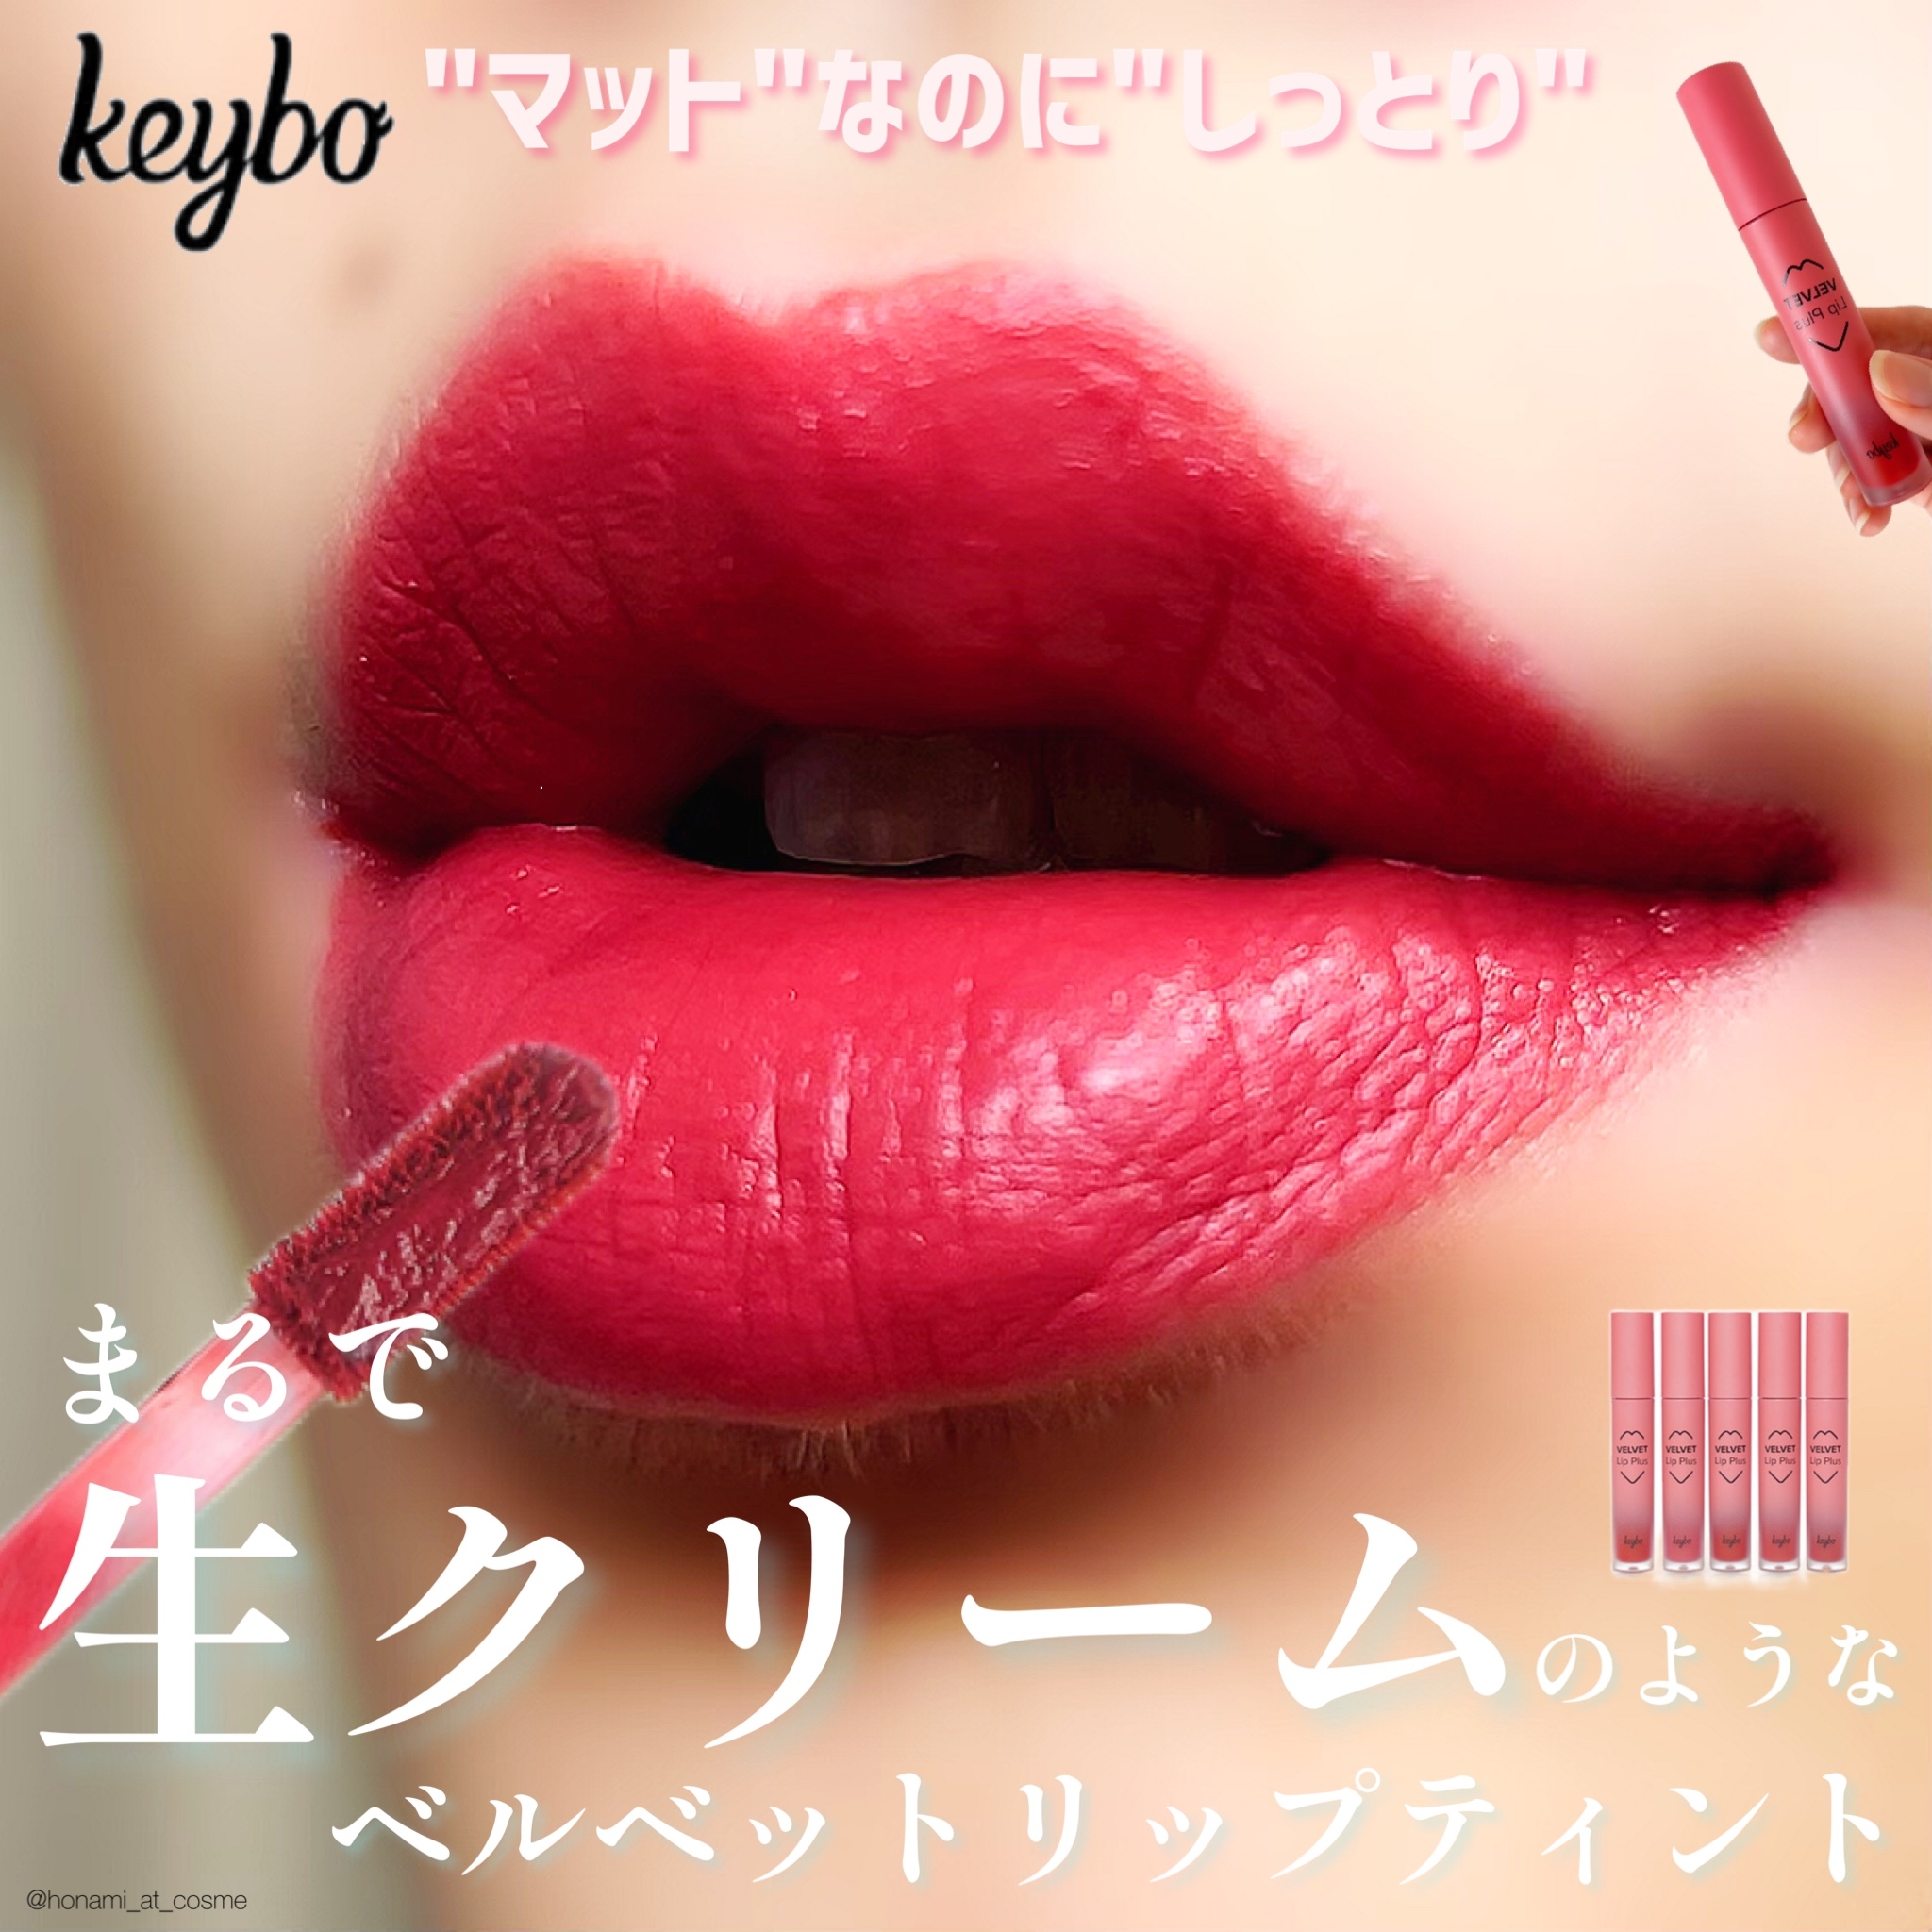 keybo(キボ) ベルベットプラスの良い点・メリットに関するほなみ☺︎さんの口コミ画像1